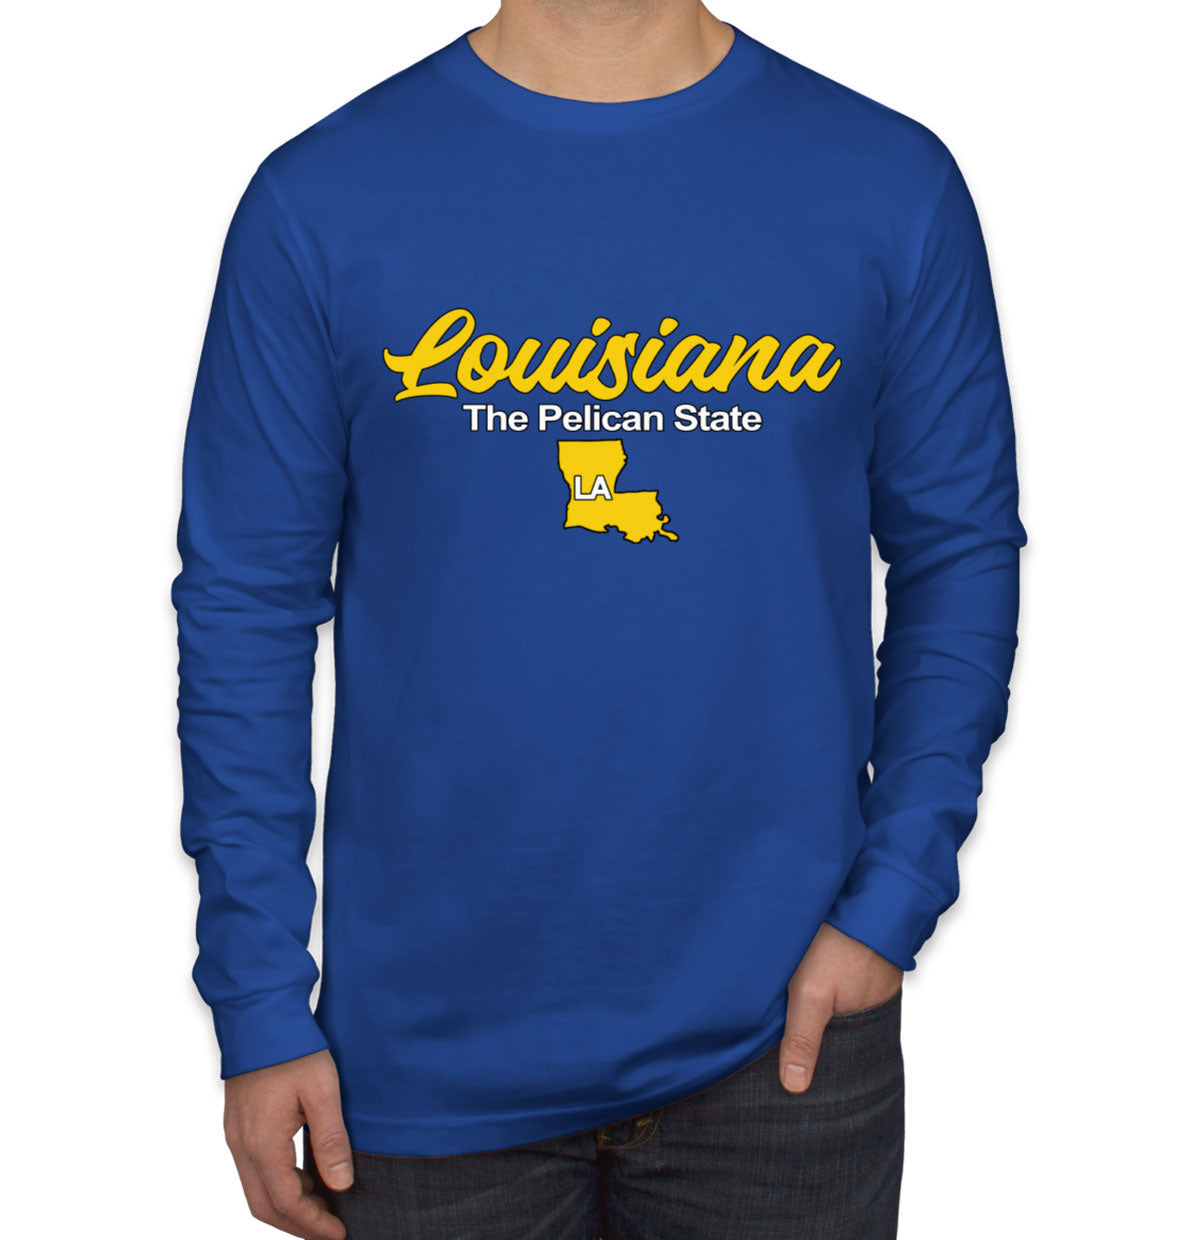 Louisiana The Pelican State Men's Long Sleeve Shirt